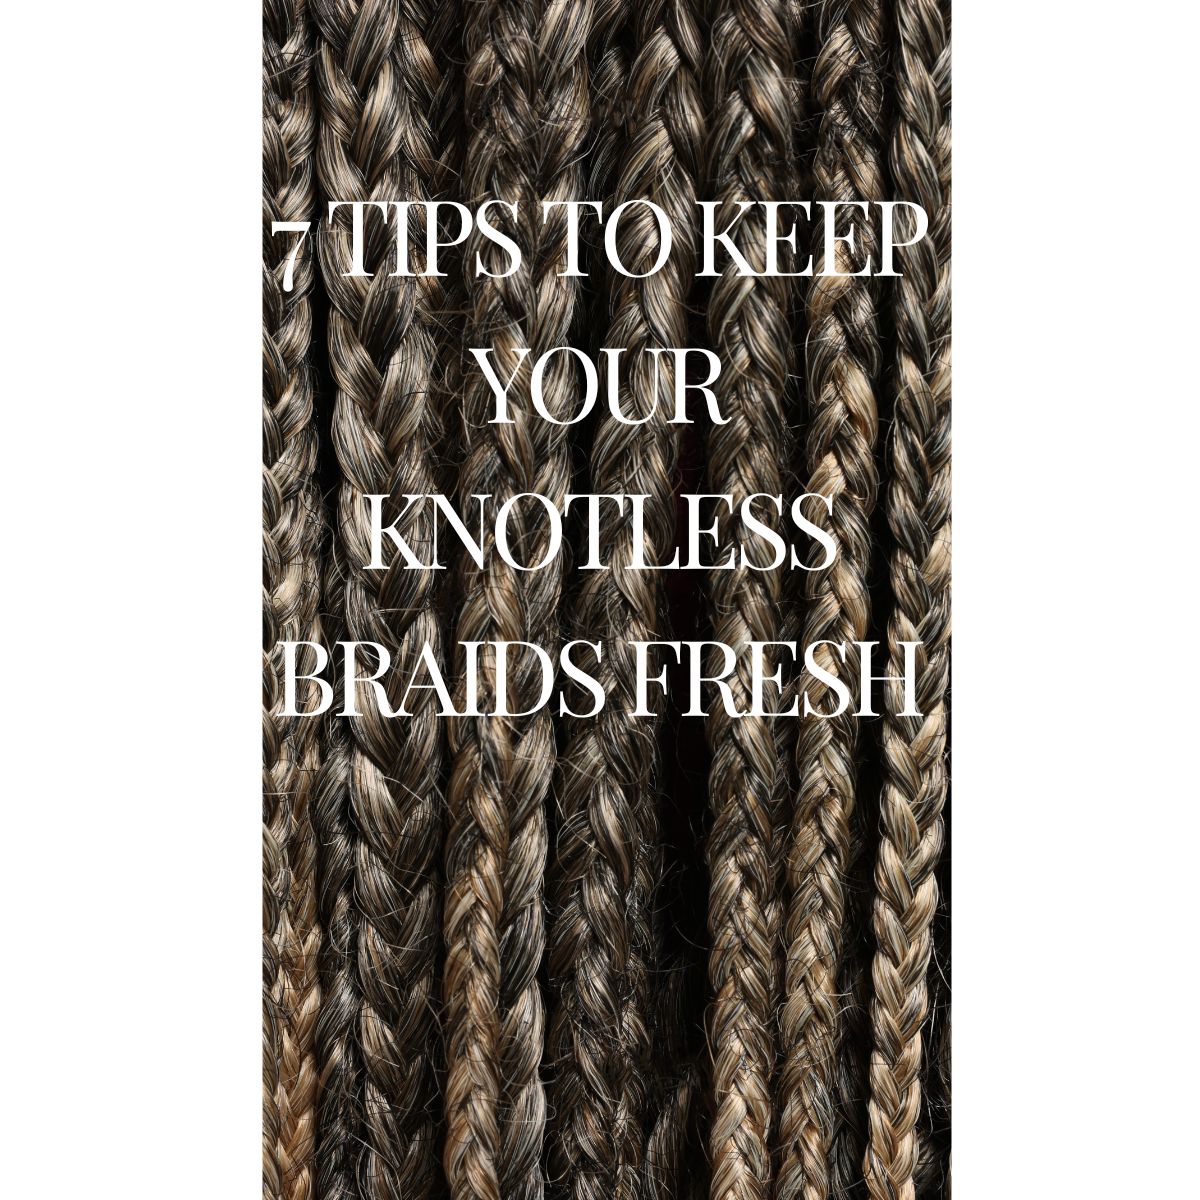 7 Tips To Keep Knotless Box Braids Fresh